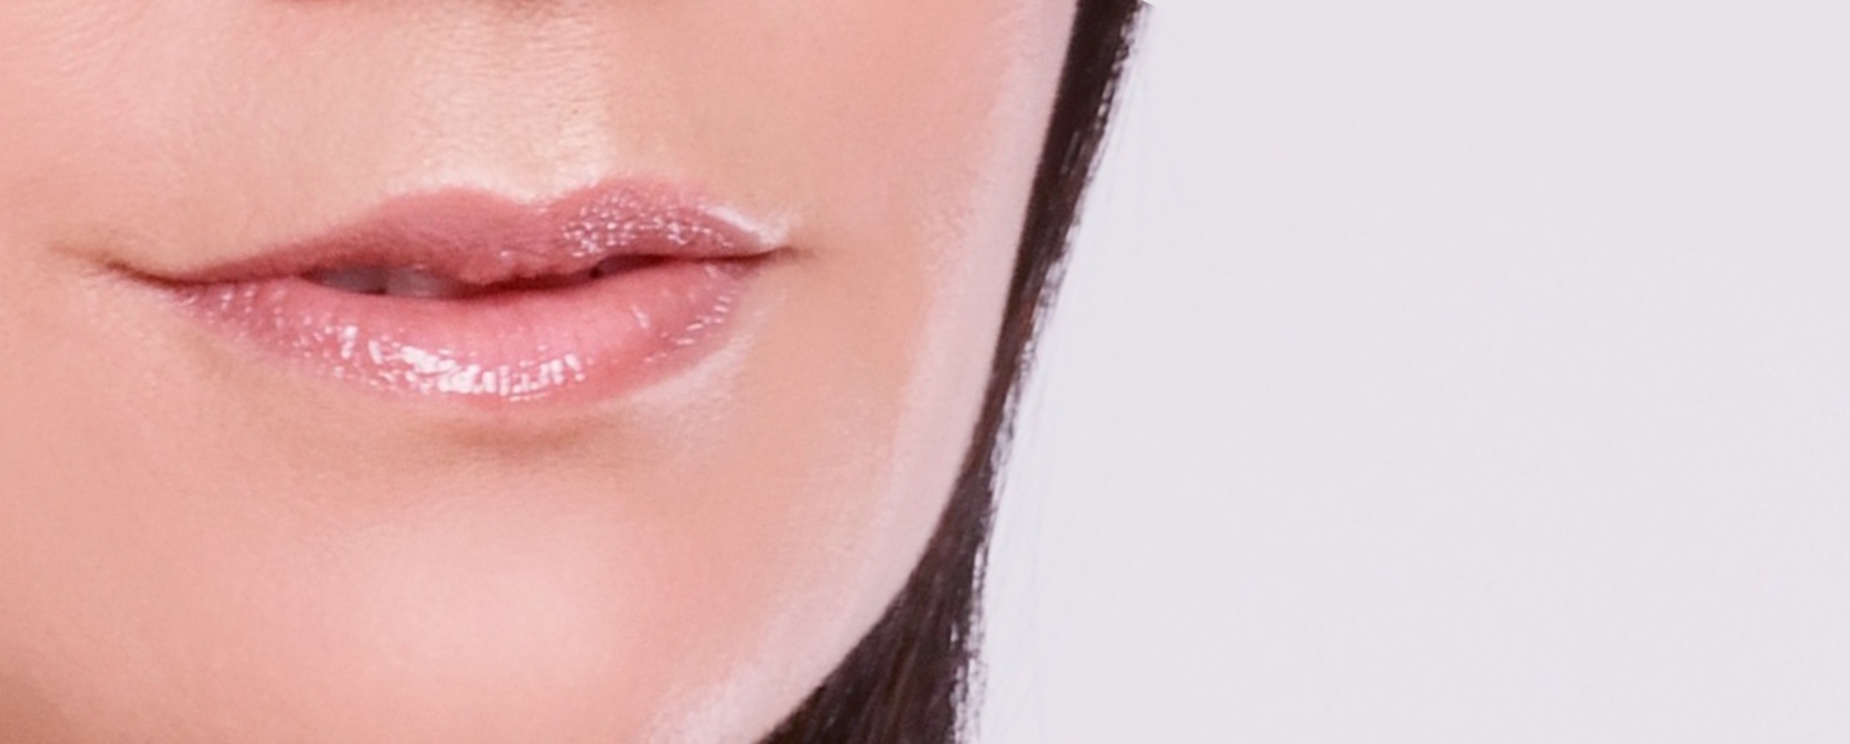 Upper lip lines